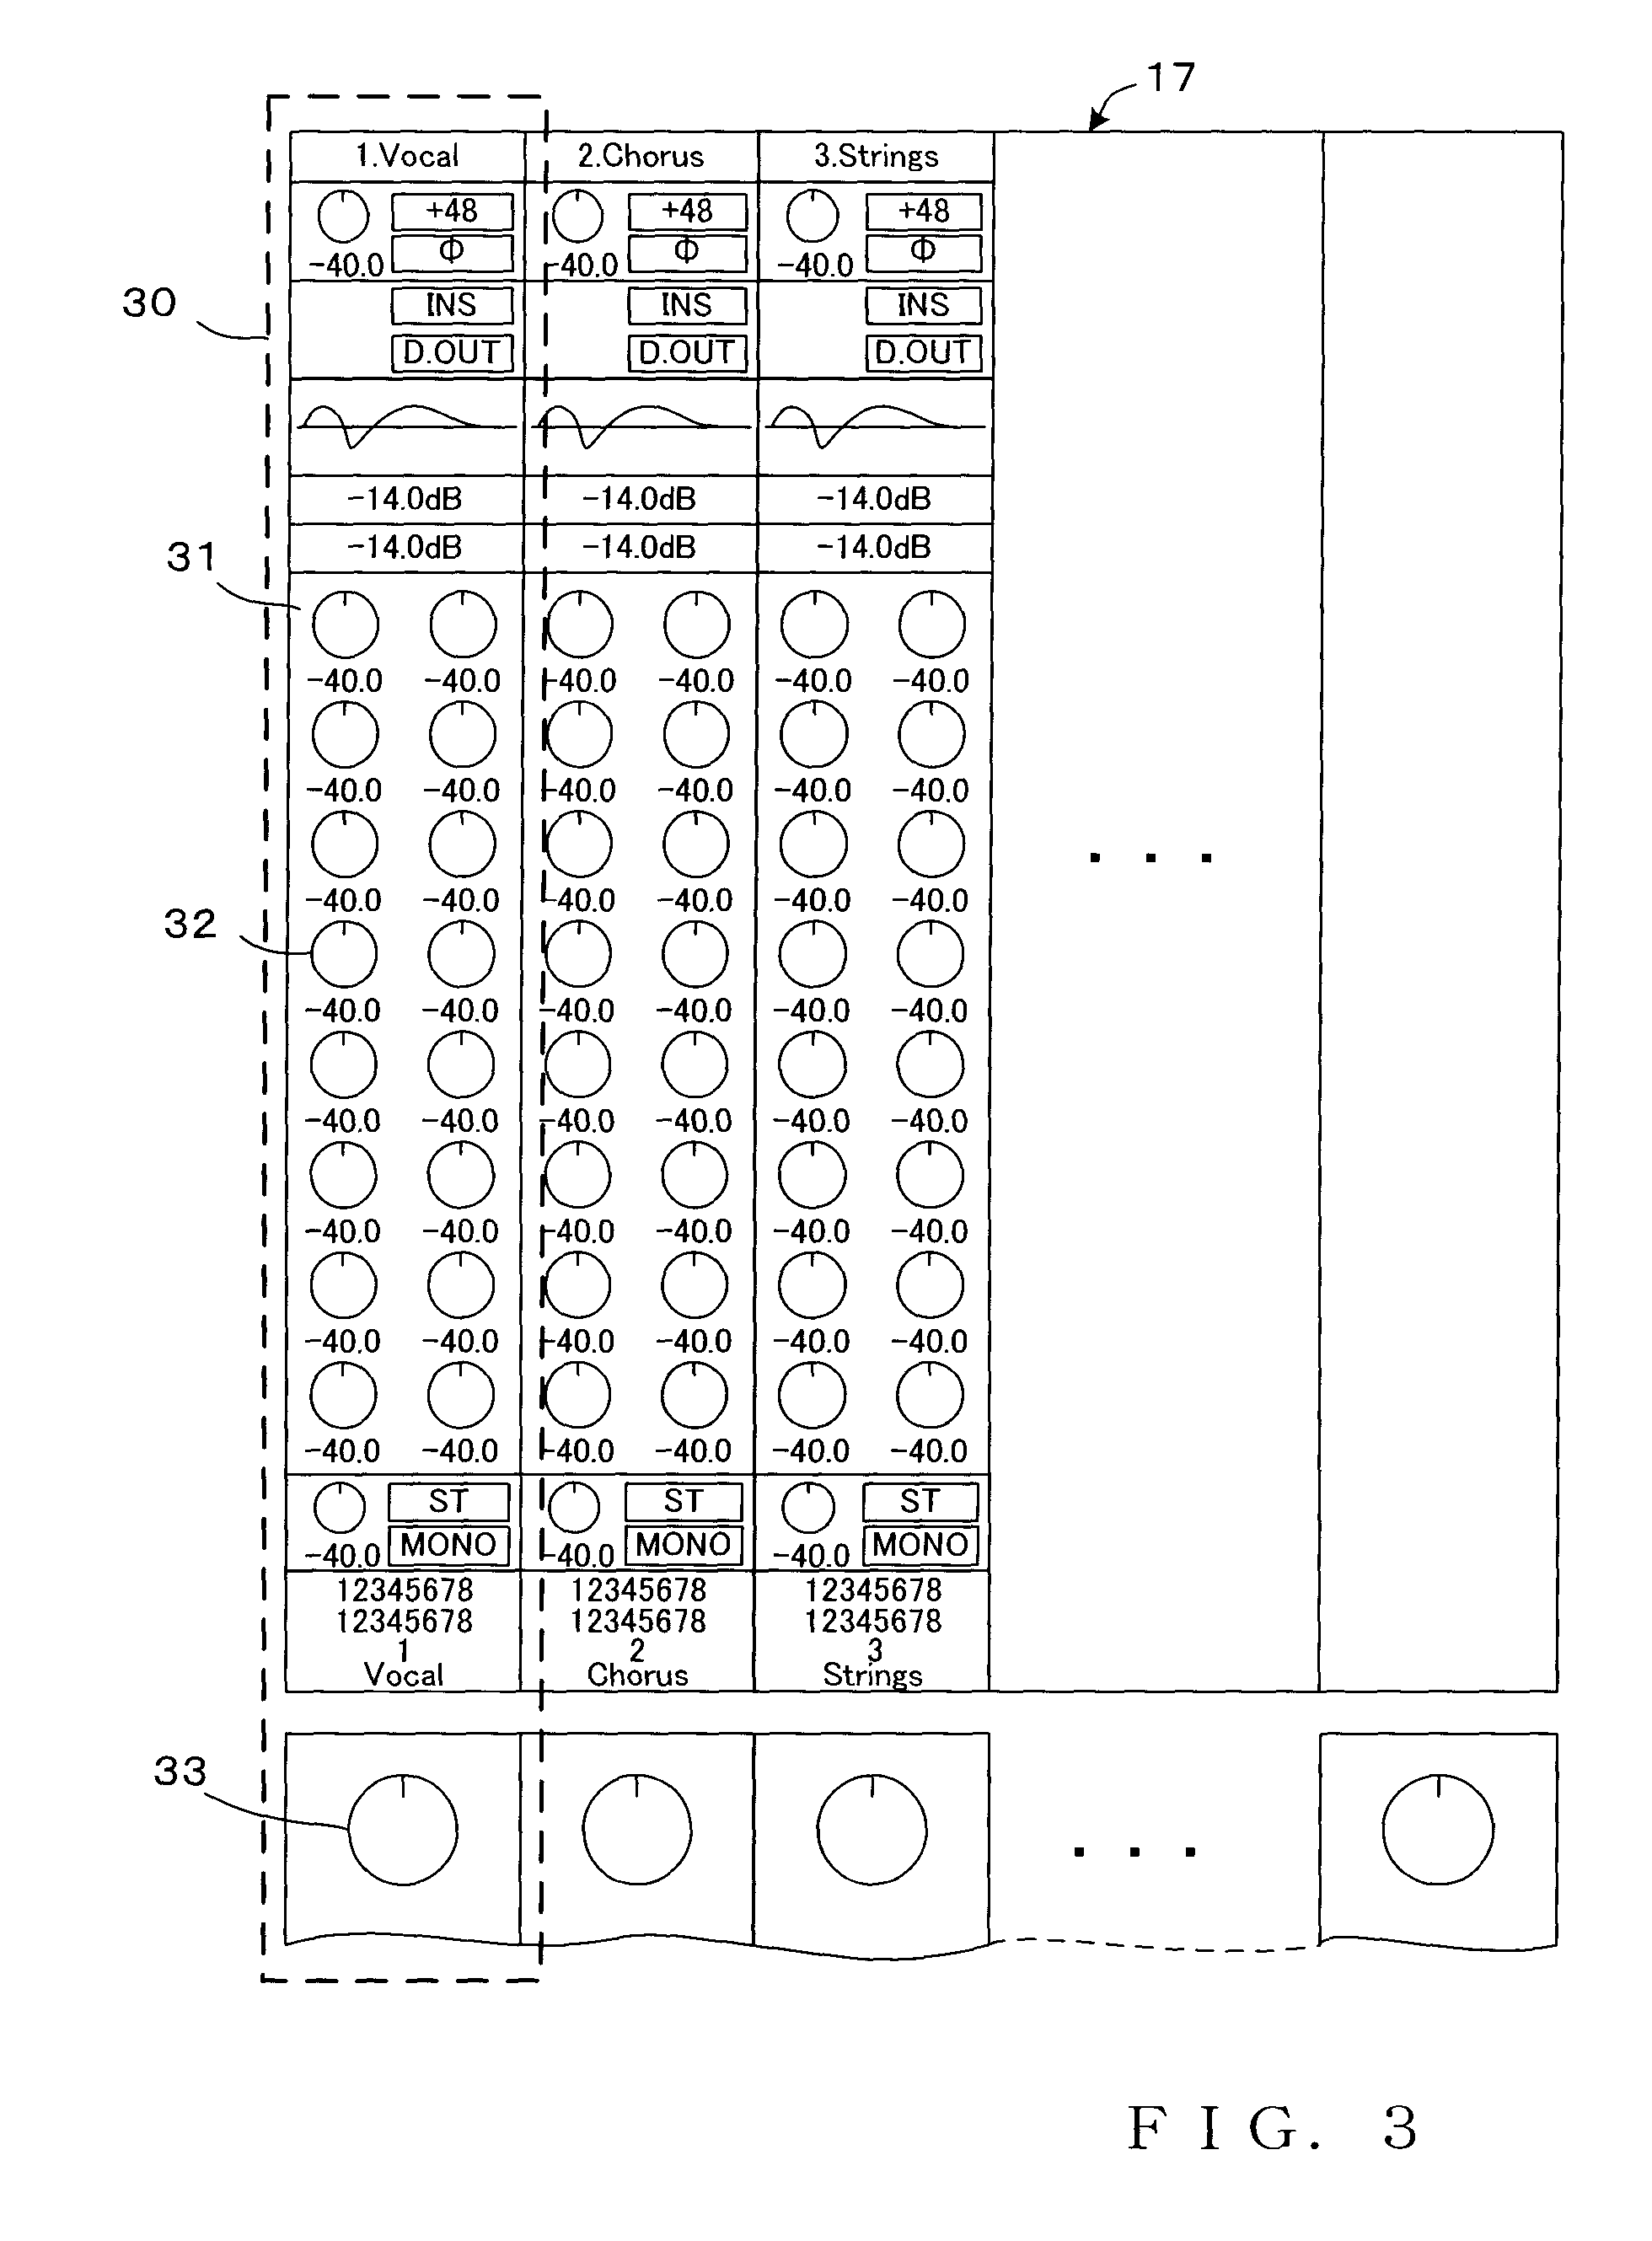 Parameter adjustment apparatus and audio mixing console